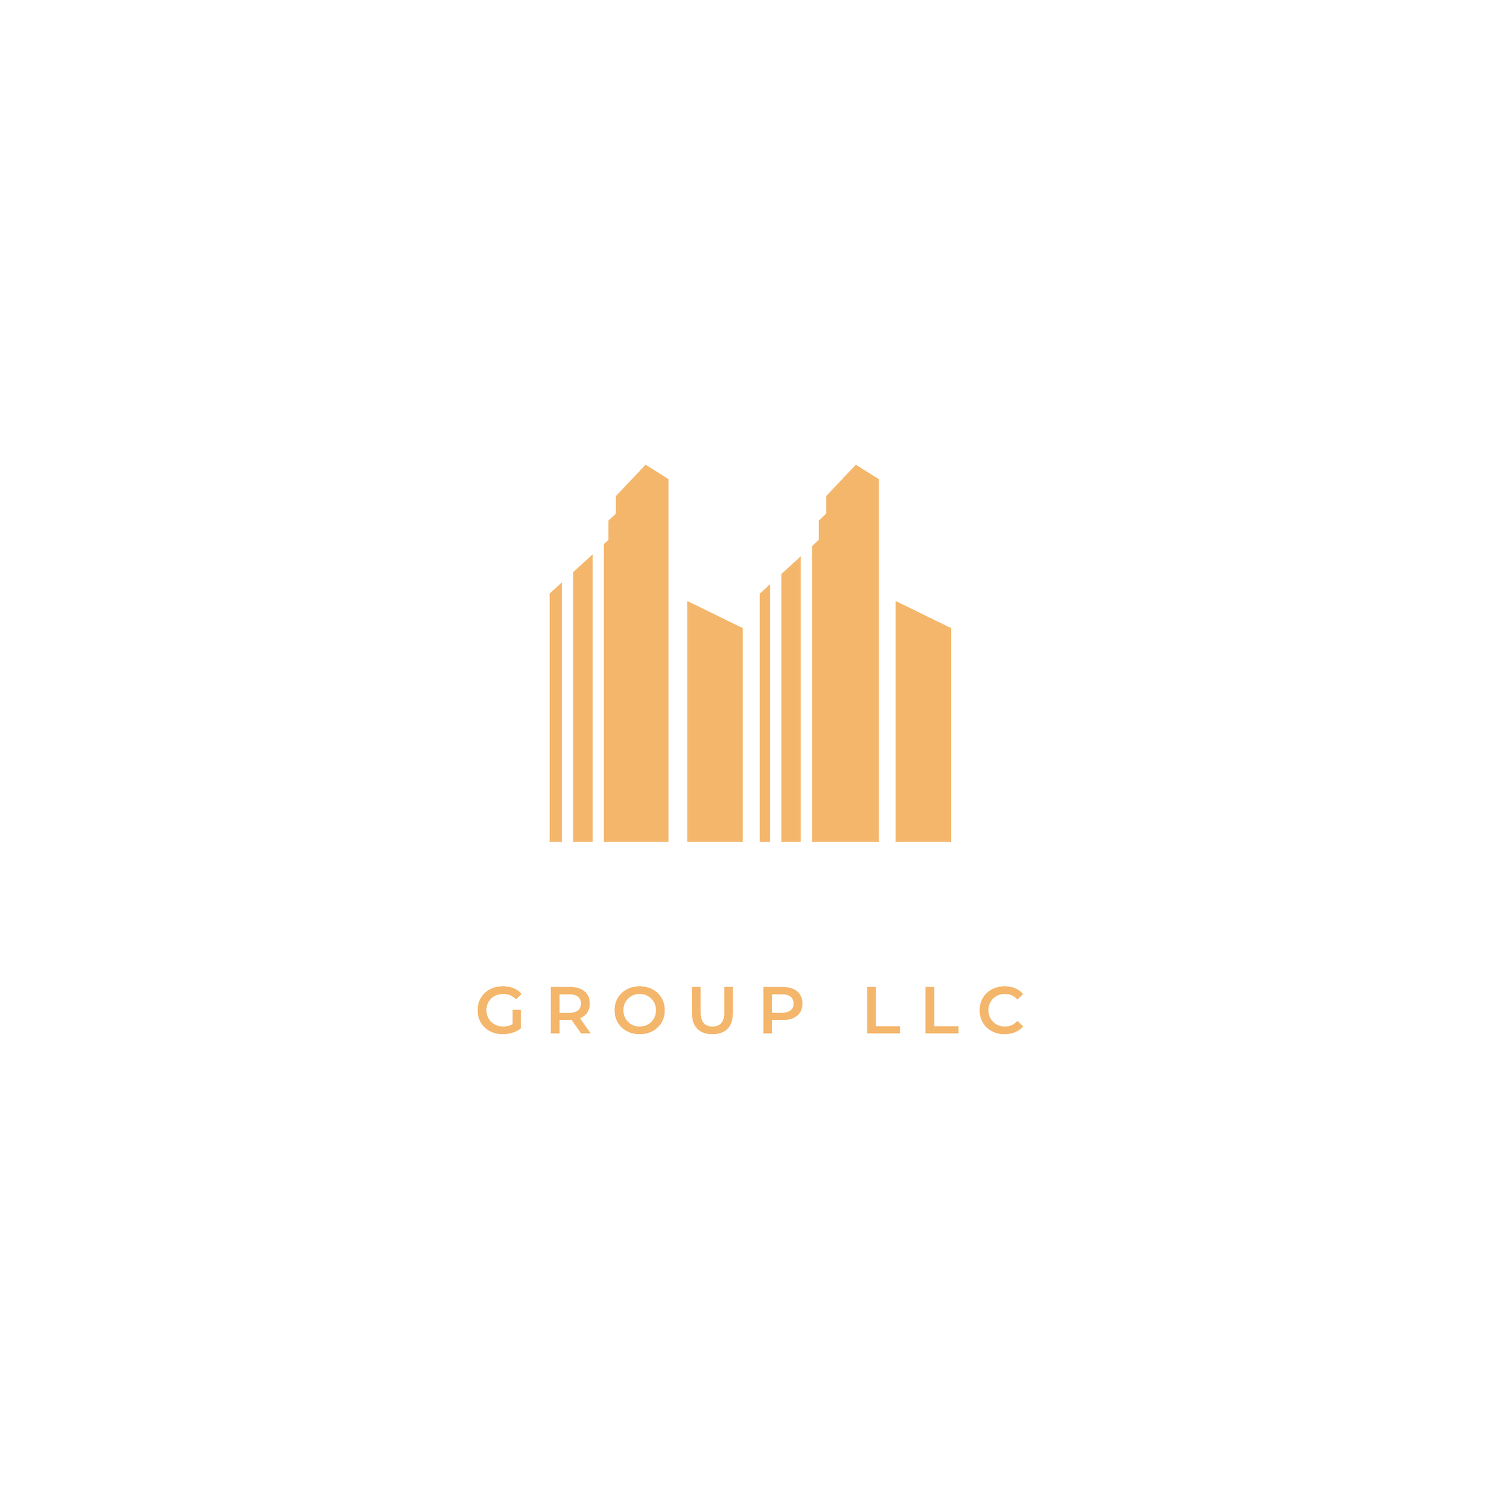 Freeman Capital Group LLC